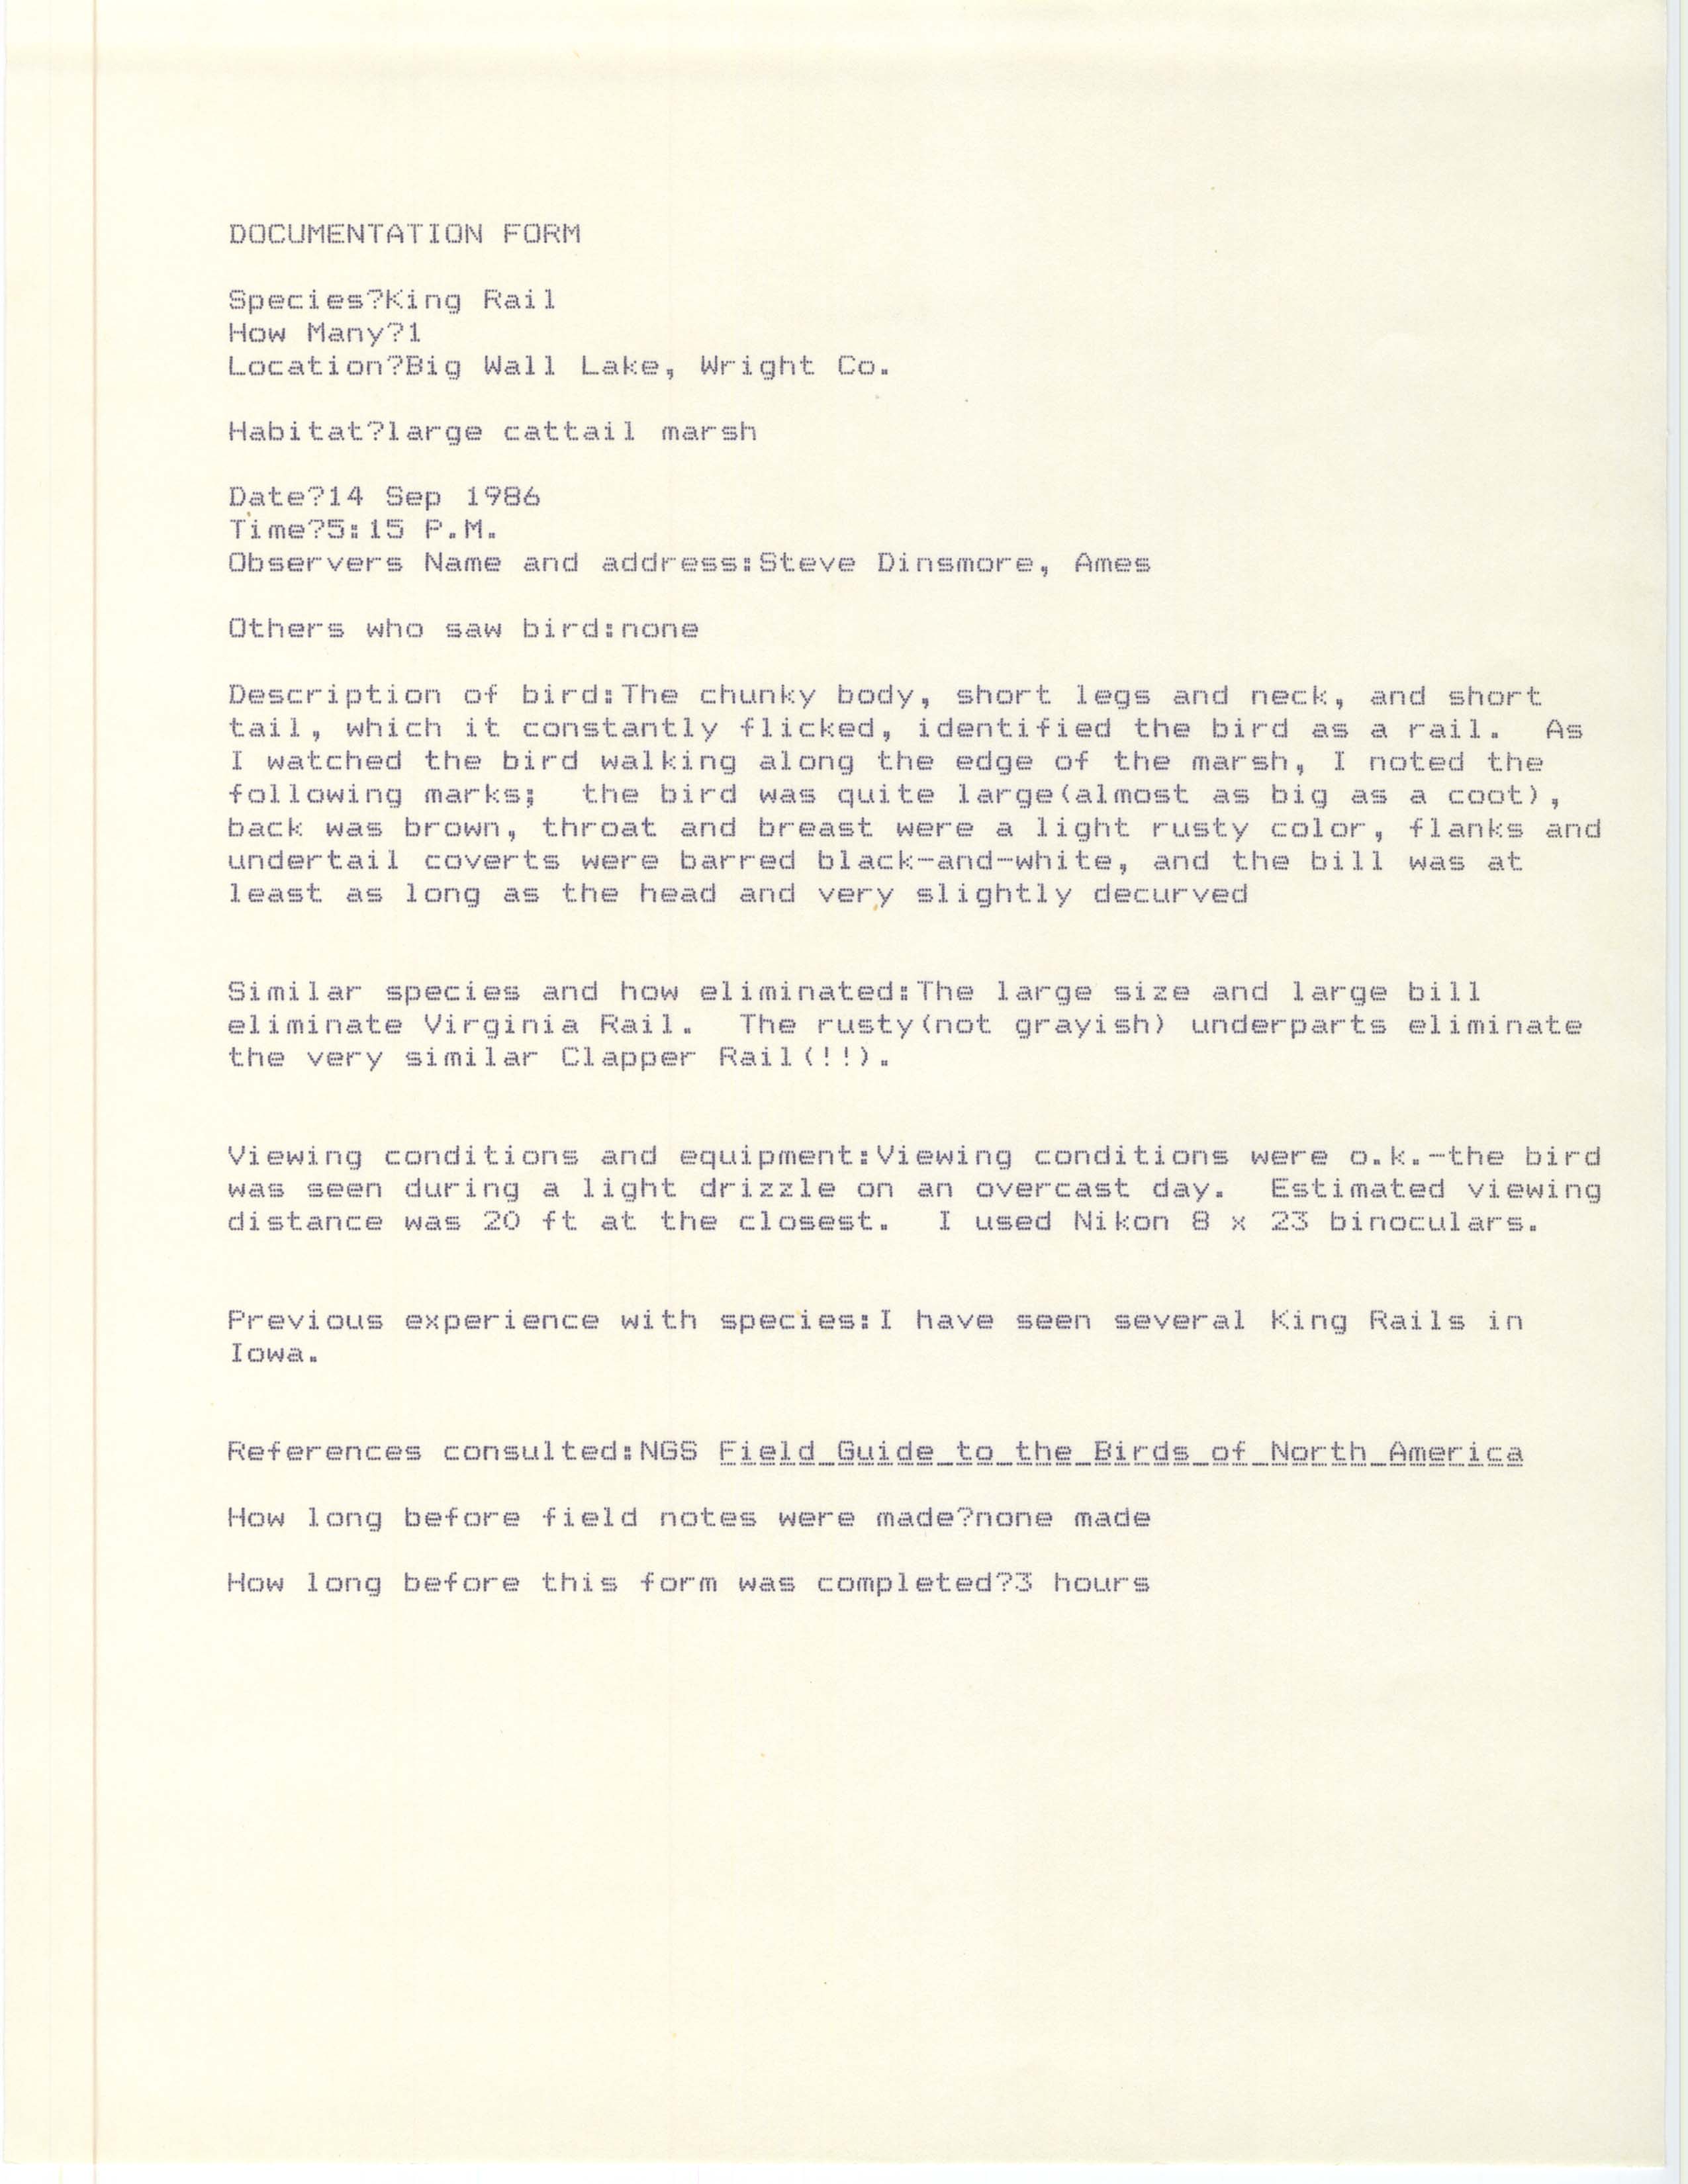 Rare bird documentation form for King Rail at Big Wall Lake, 1986